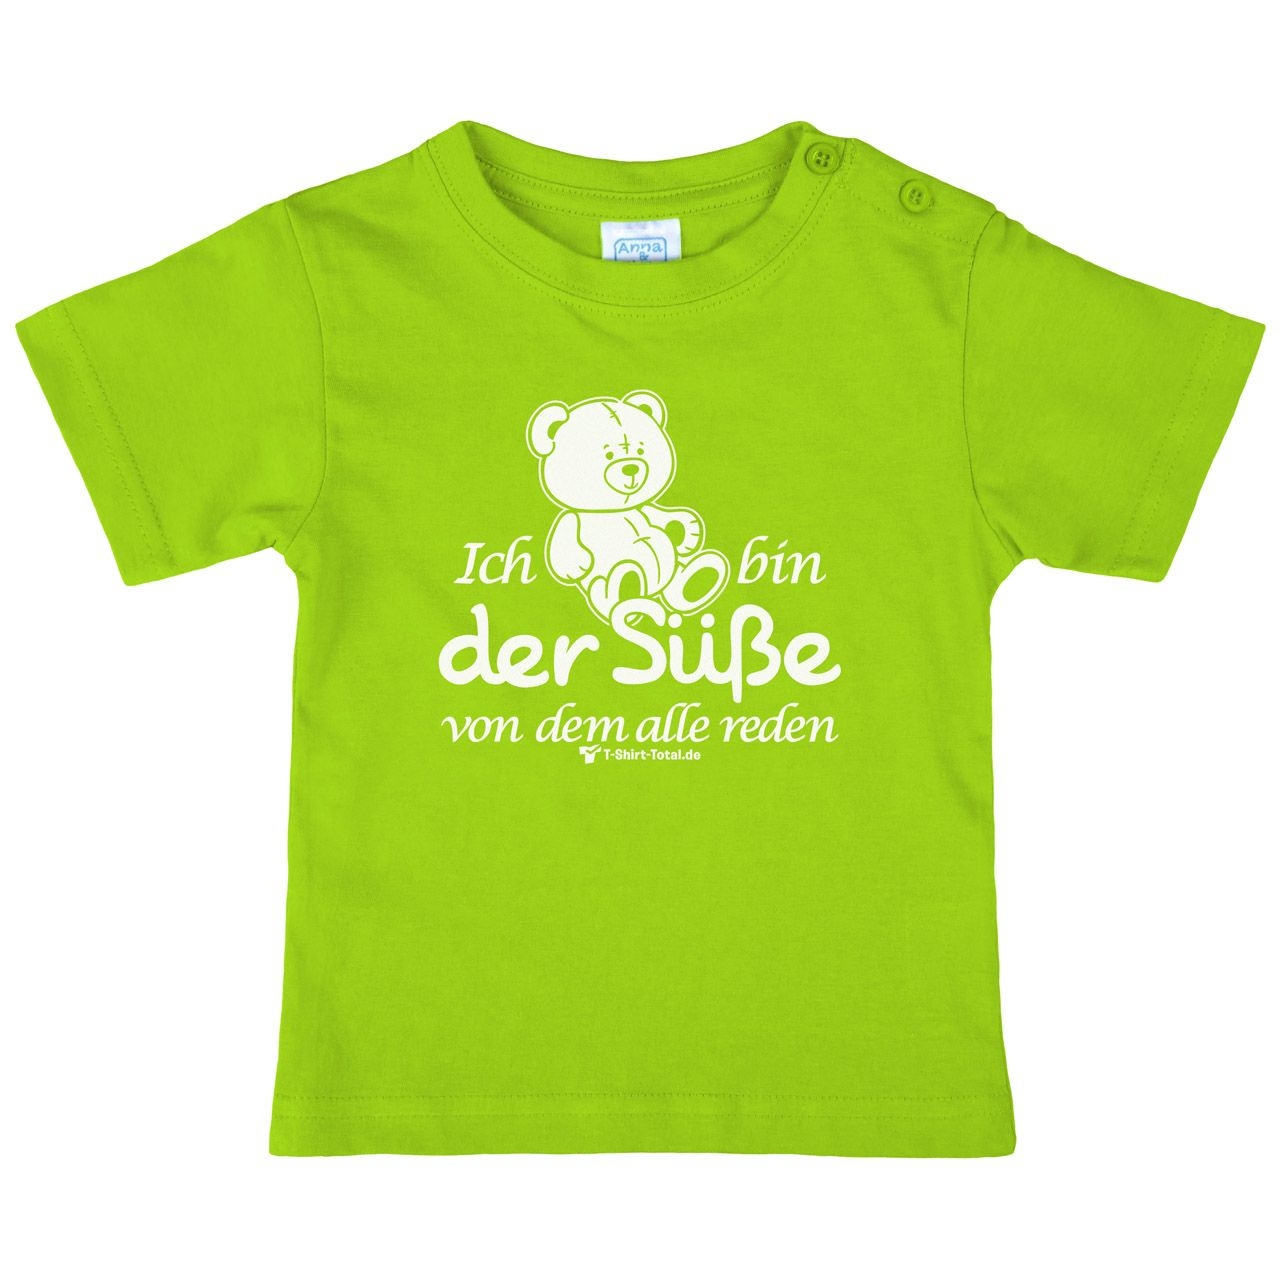 Der Süße Kinder T-Shirt hellgrün 56 / 62